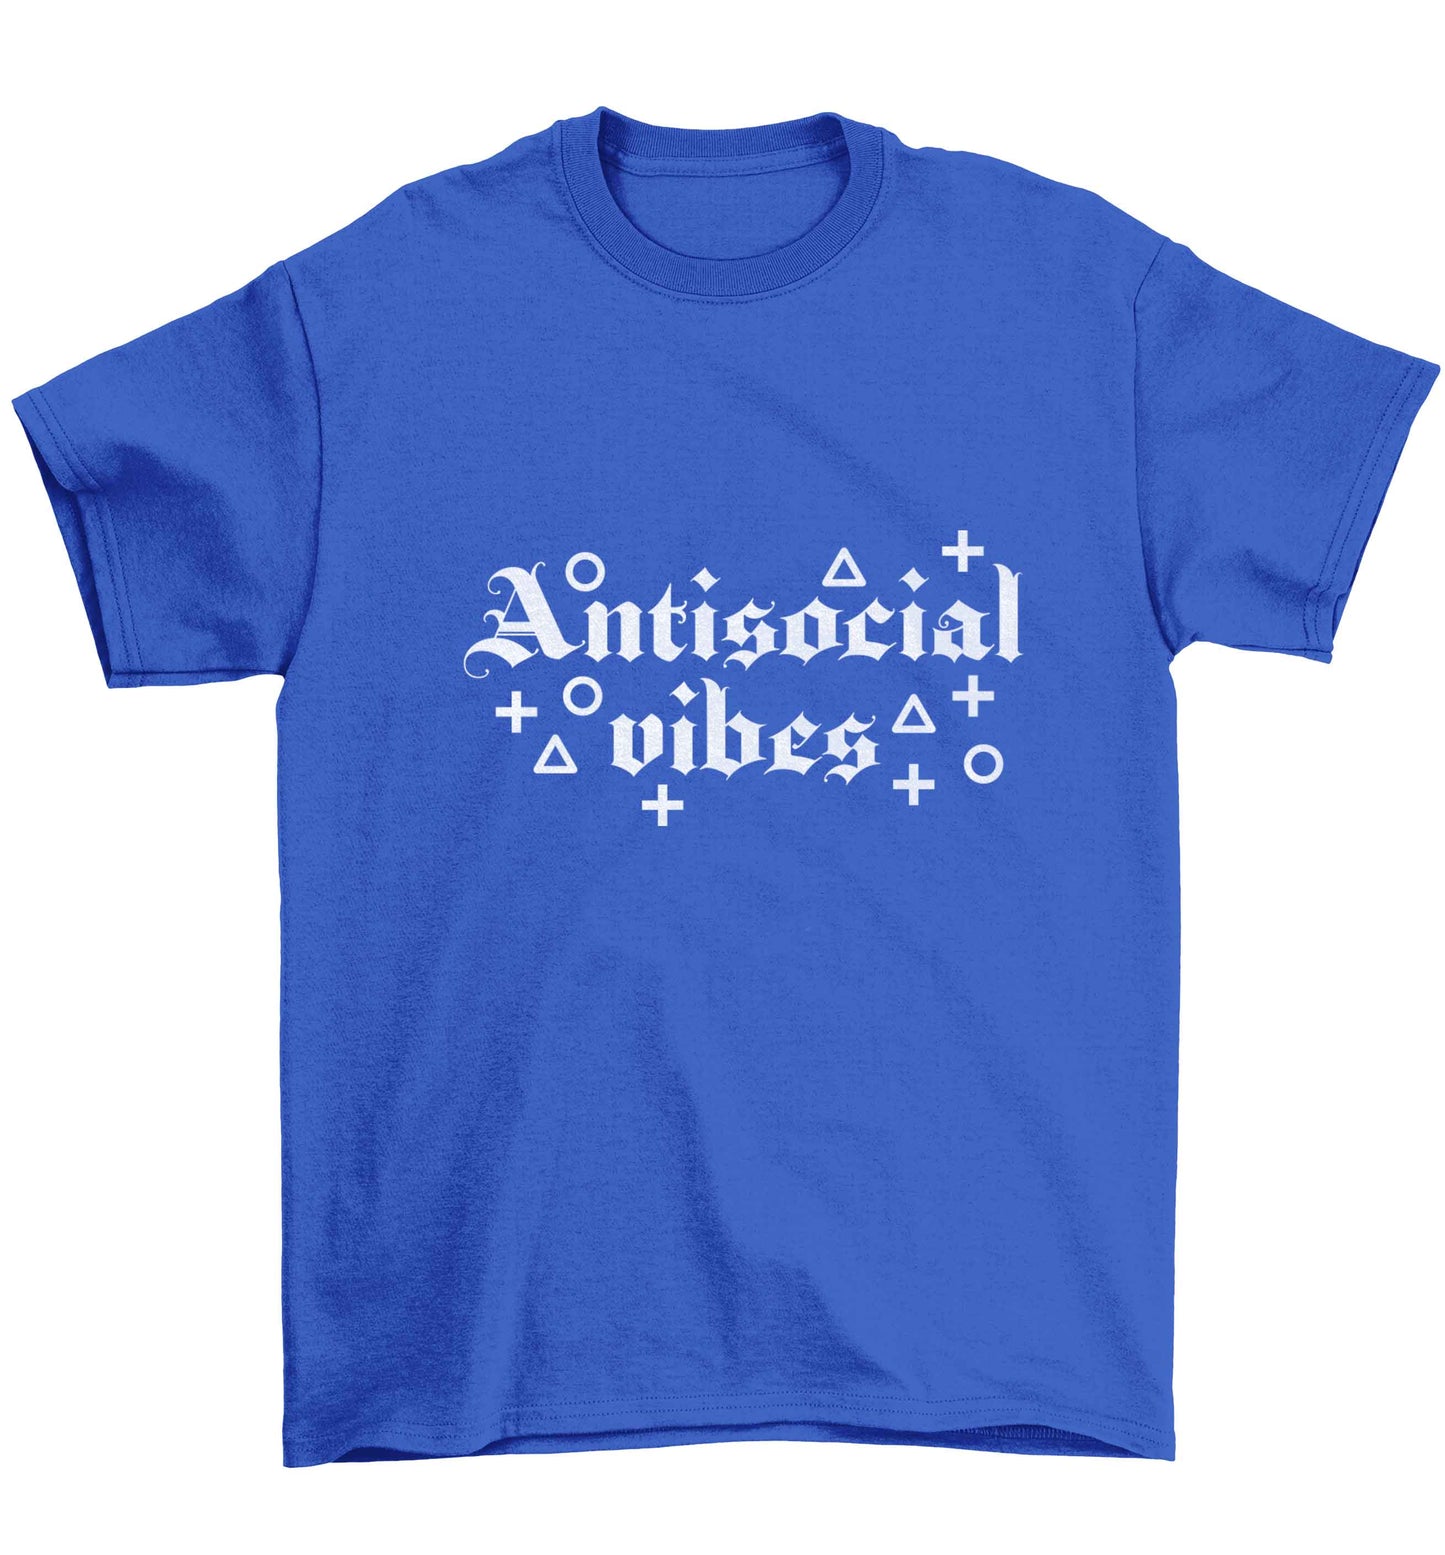 Antisocial vibes Children's blue Tshirt 12-13 Years